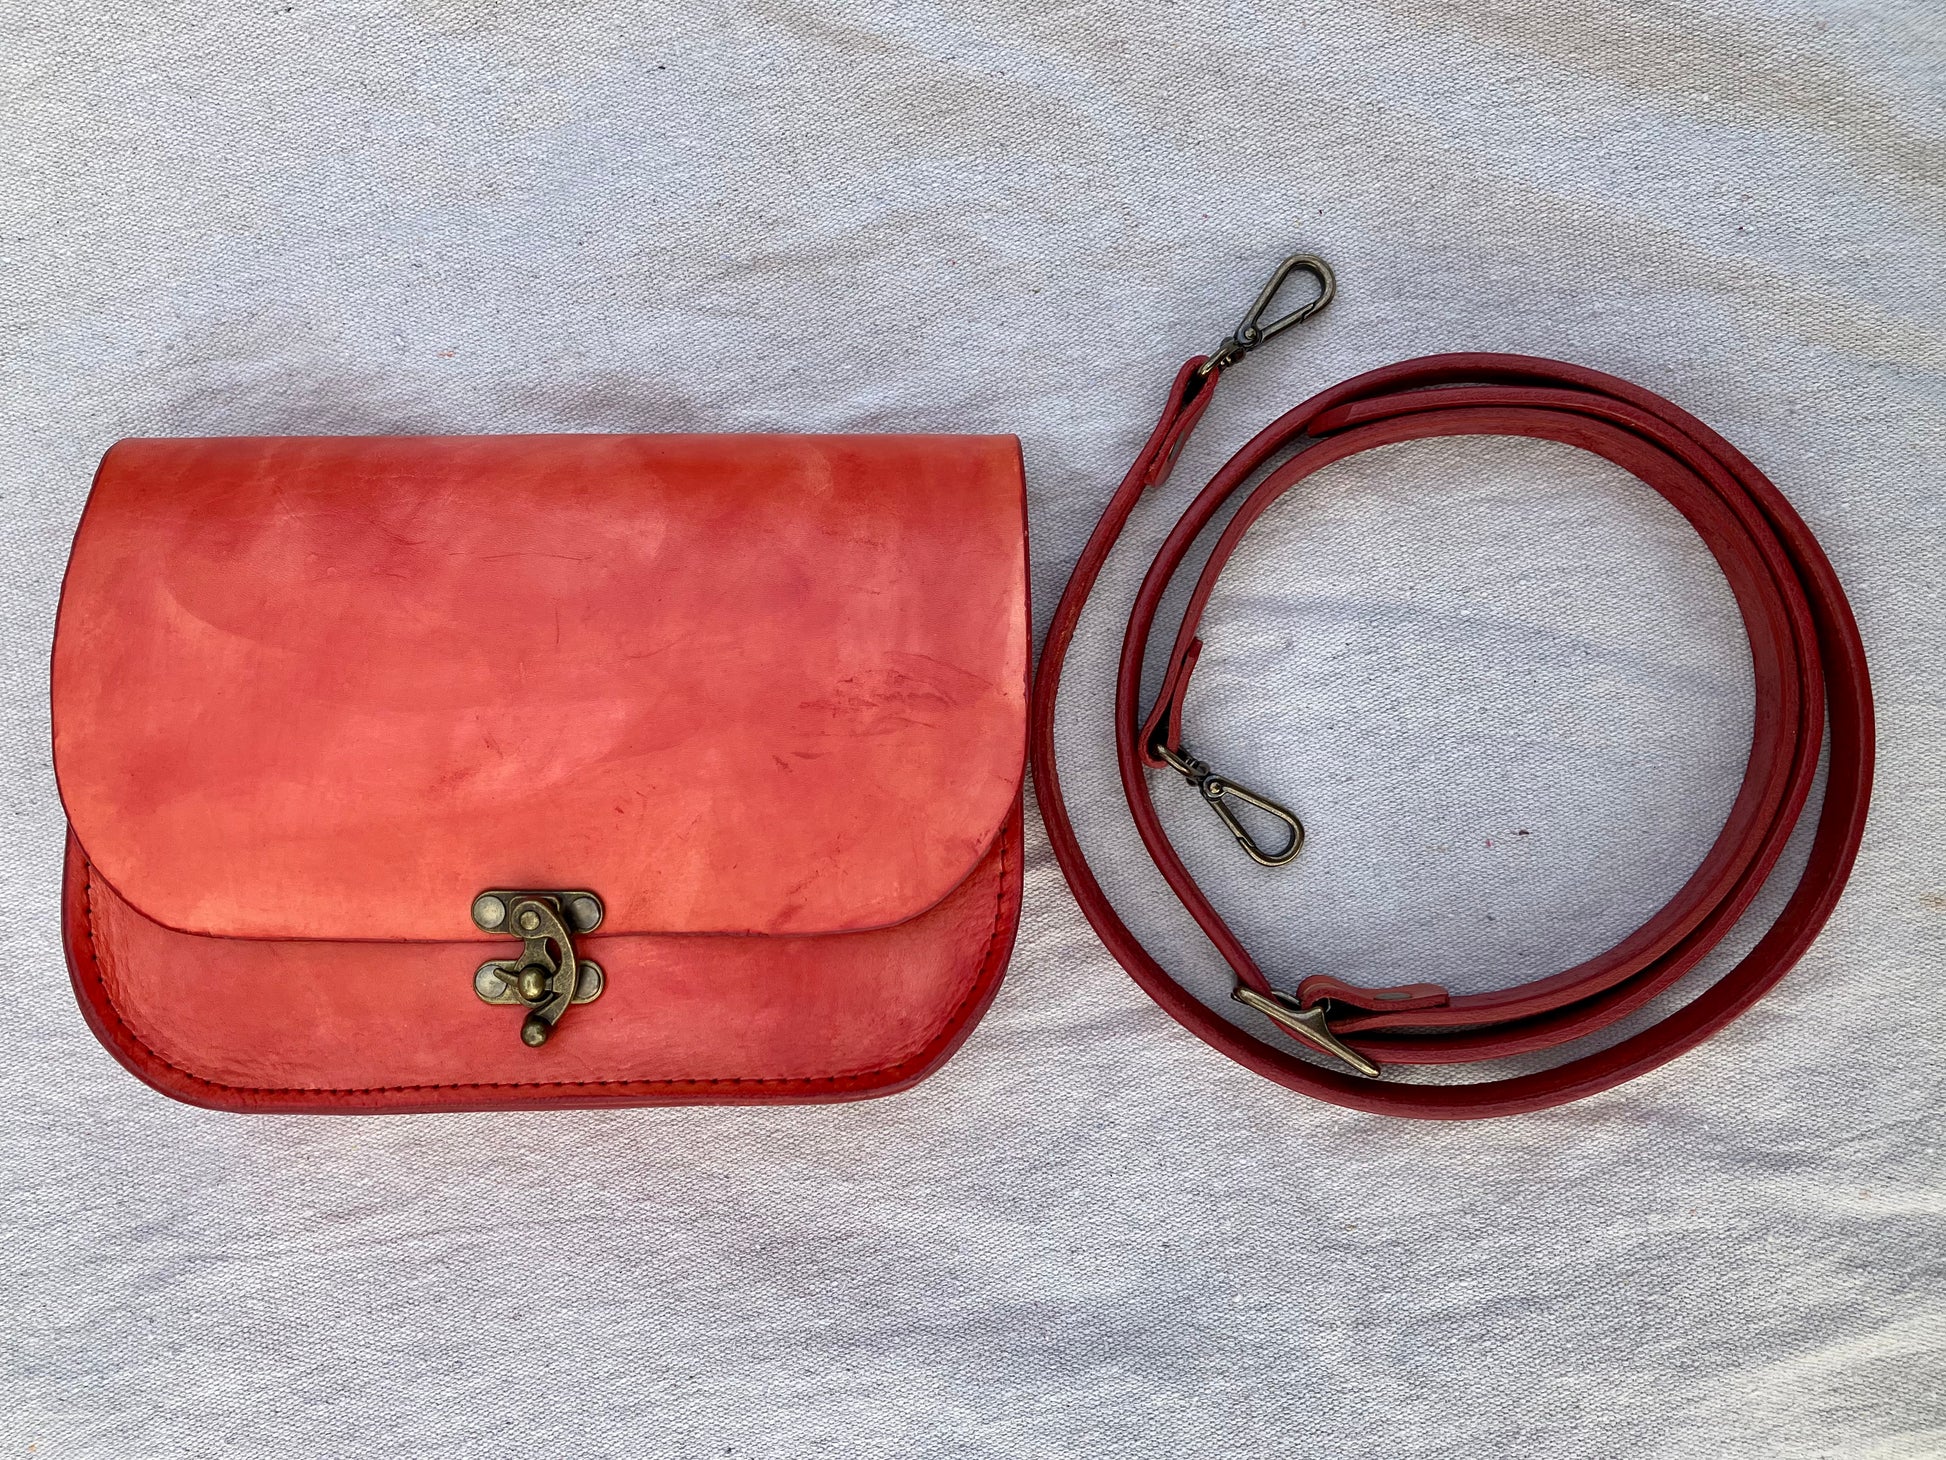 orange handmade leather bag/belt-bag hybrid with crossbody strap by Wilder Leather.